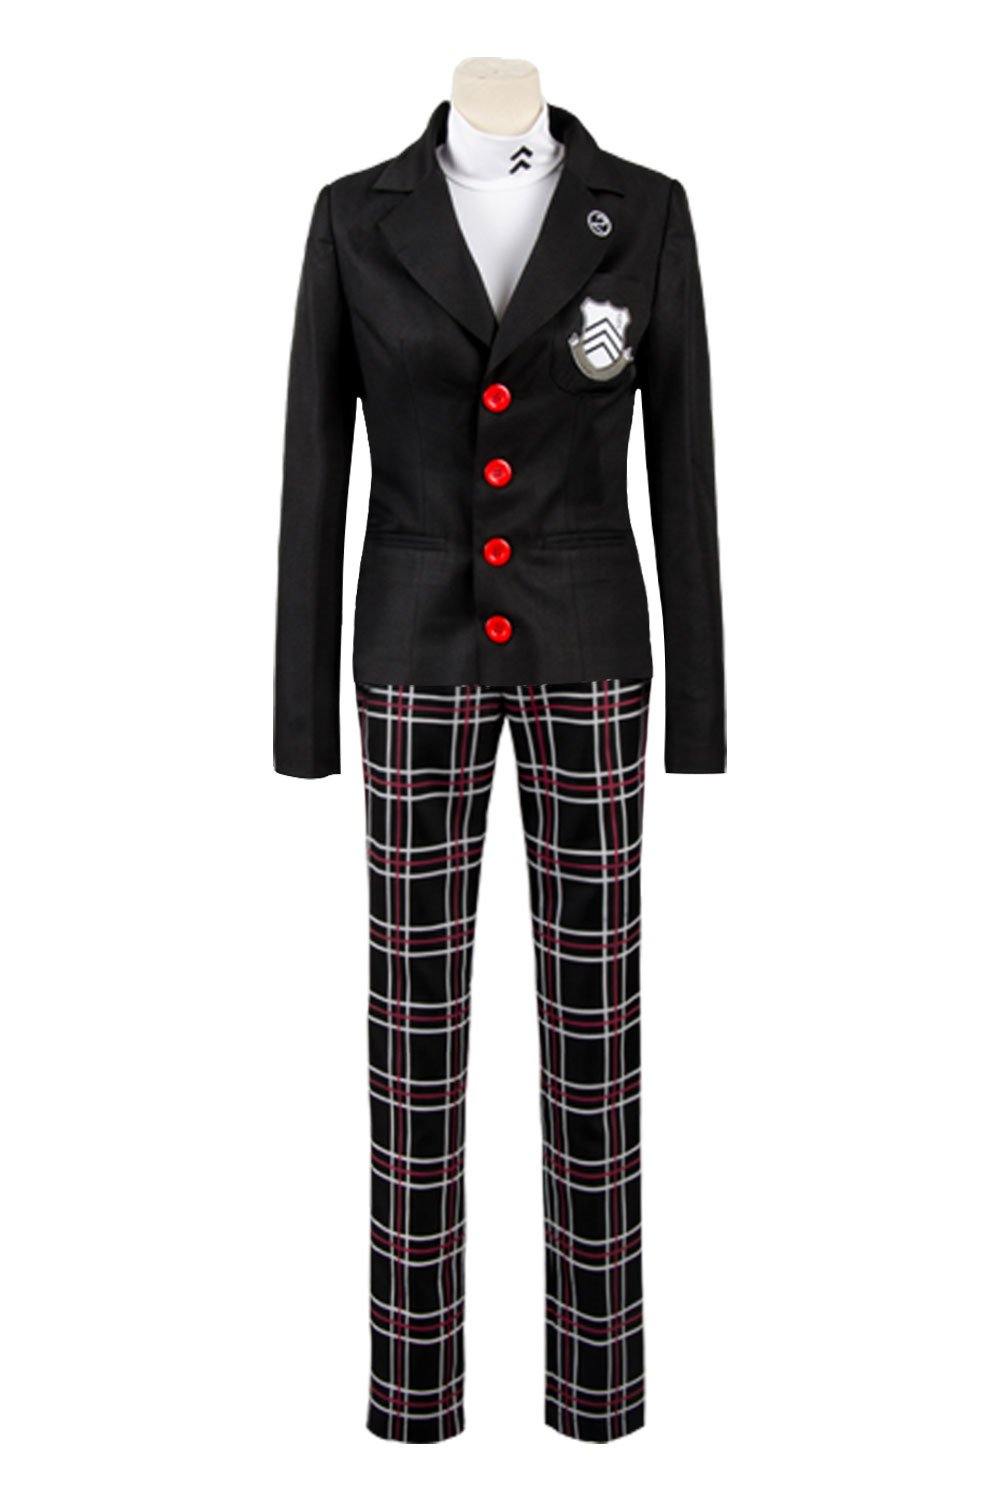 Persona 5 Protagonist Uniform Cosplay Kostüm - cosplaycartde